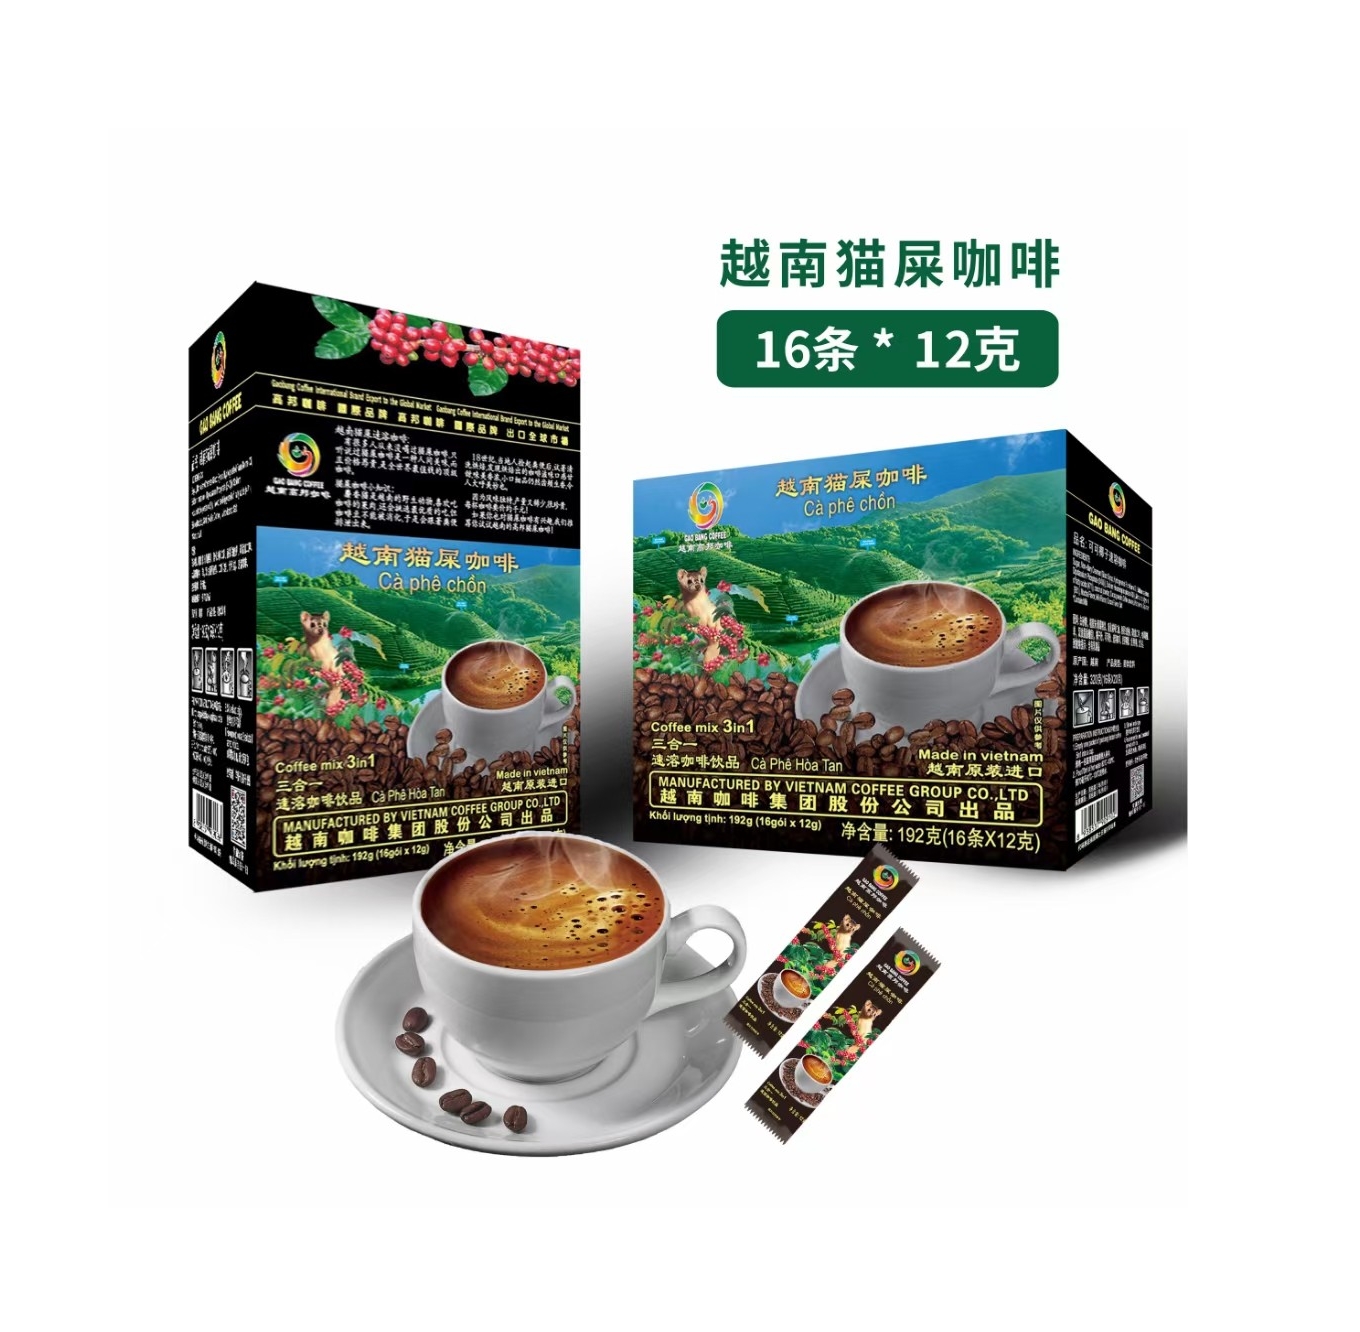 High Quality Vietnamese Weasel Legend Gaobang Coffee Weasel Mix 3in1